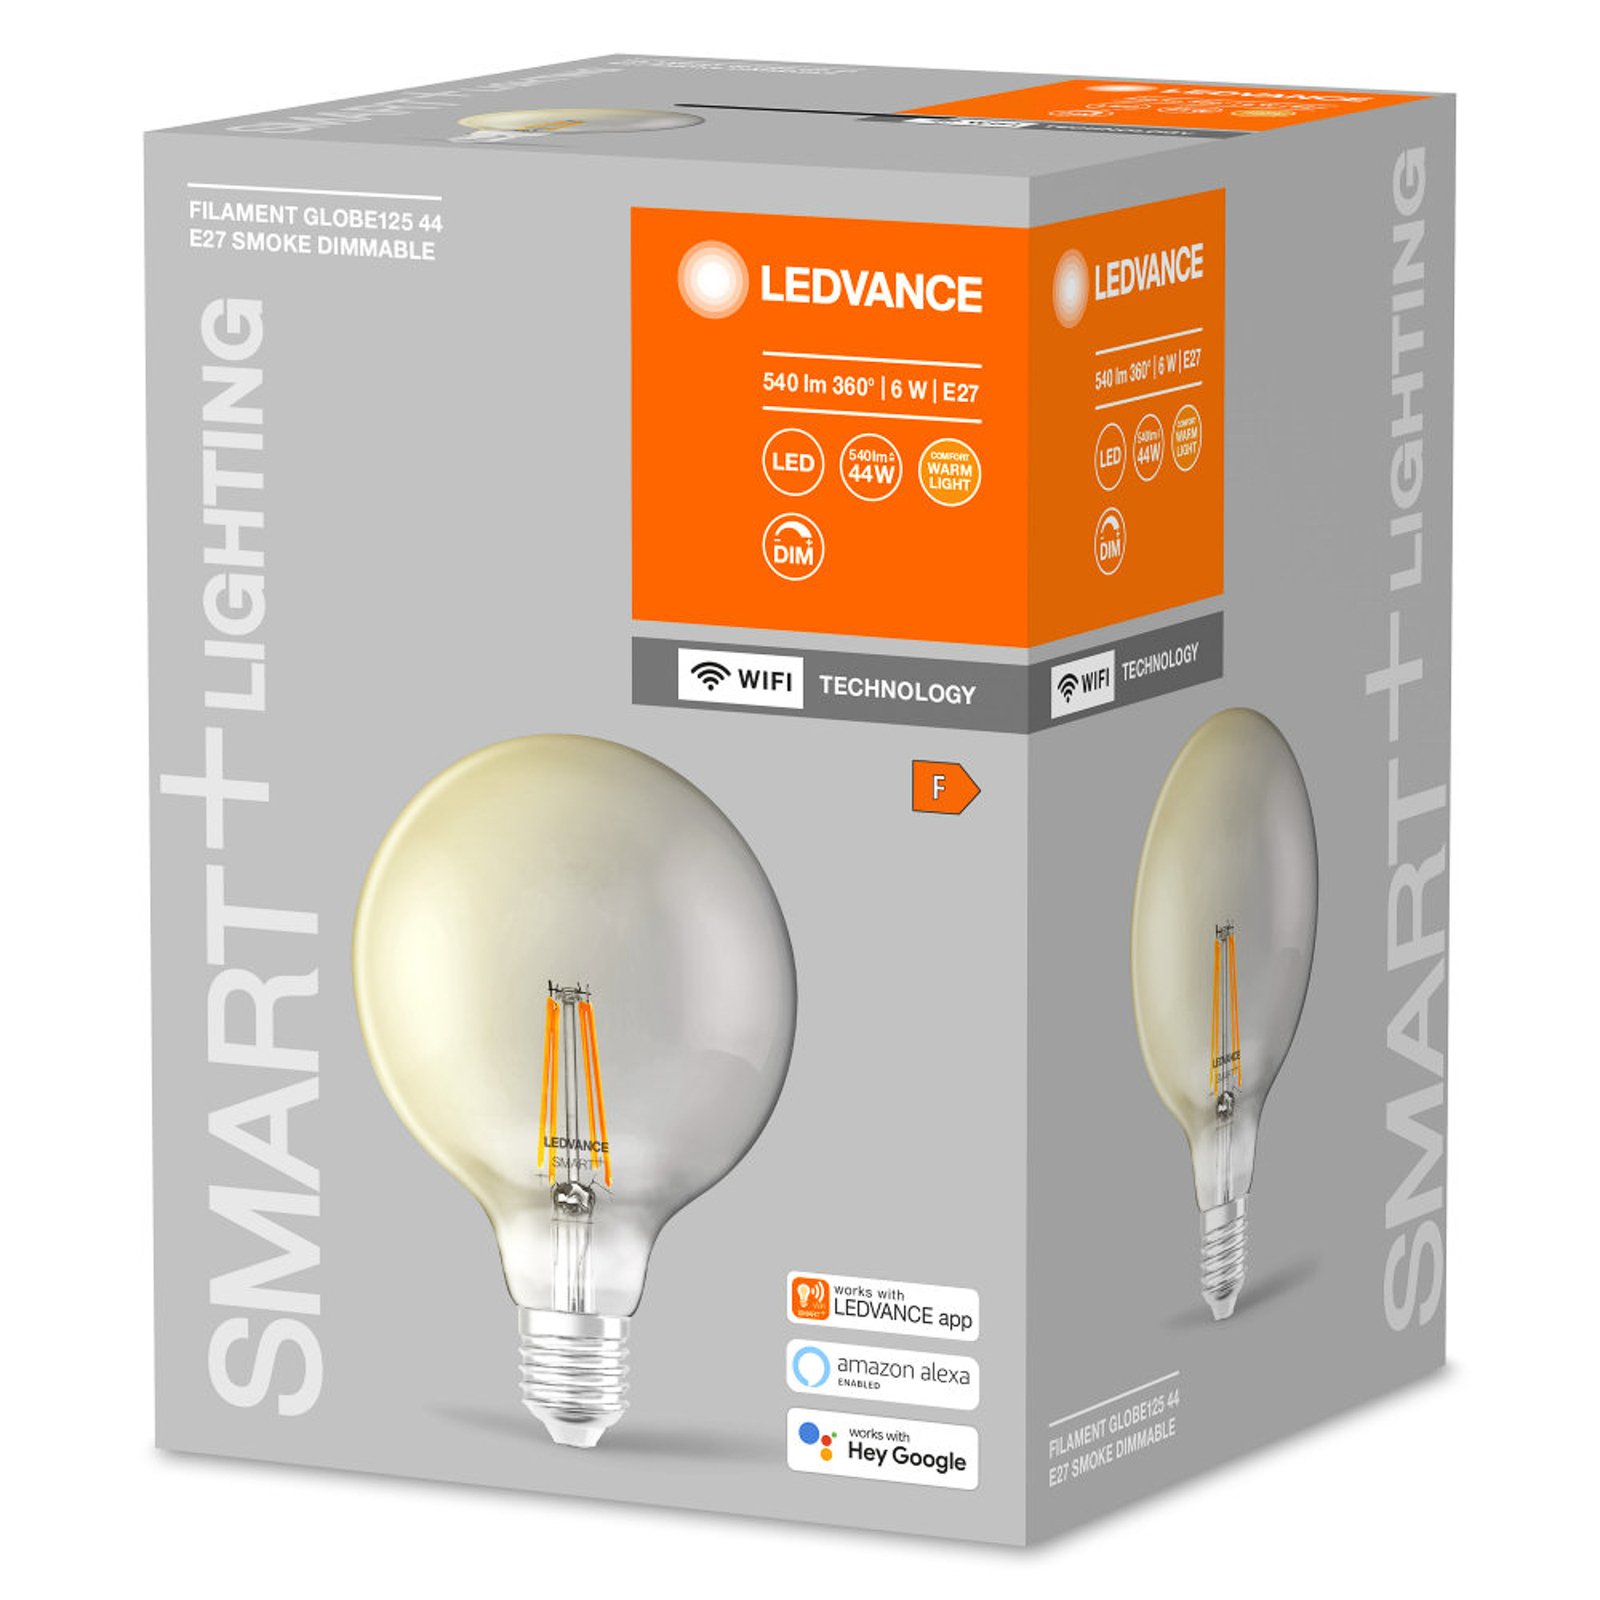 LEDVANCE SMART+ WiFi filament globe 44 E27 6W 825